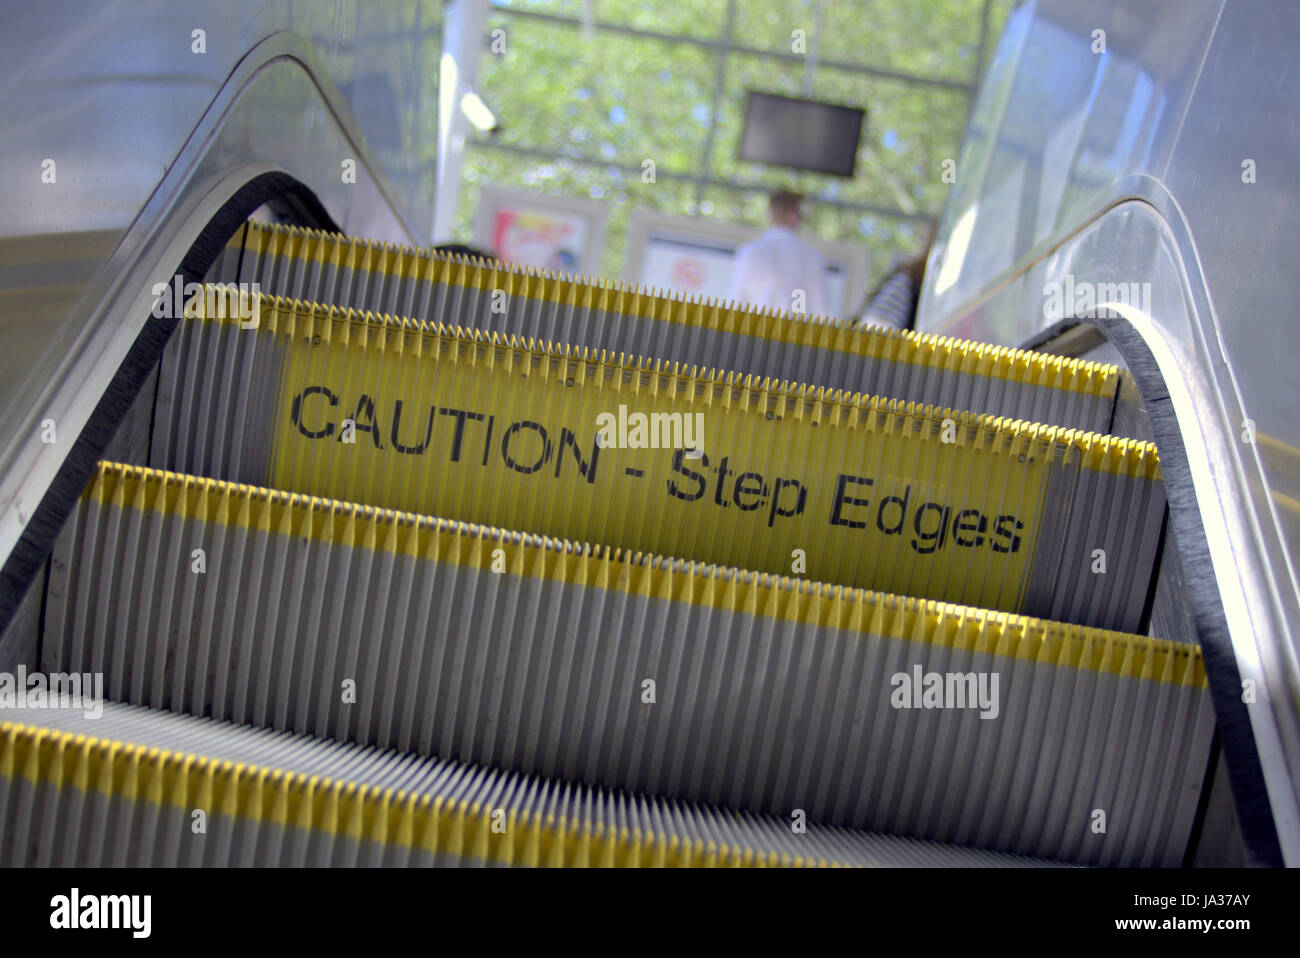 escalator steps caution step edges sign Stock Photo